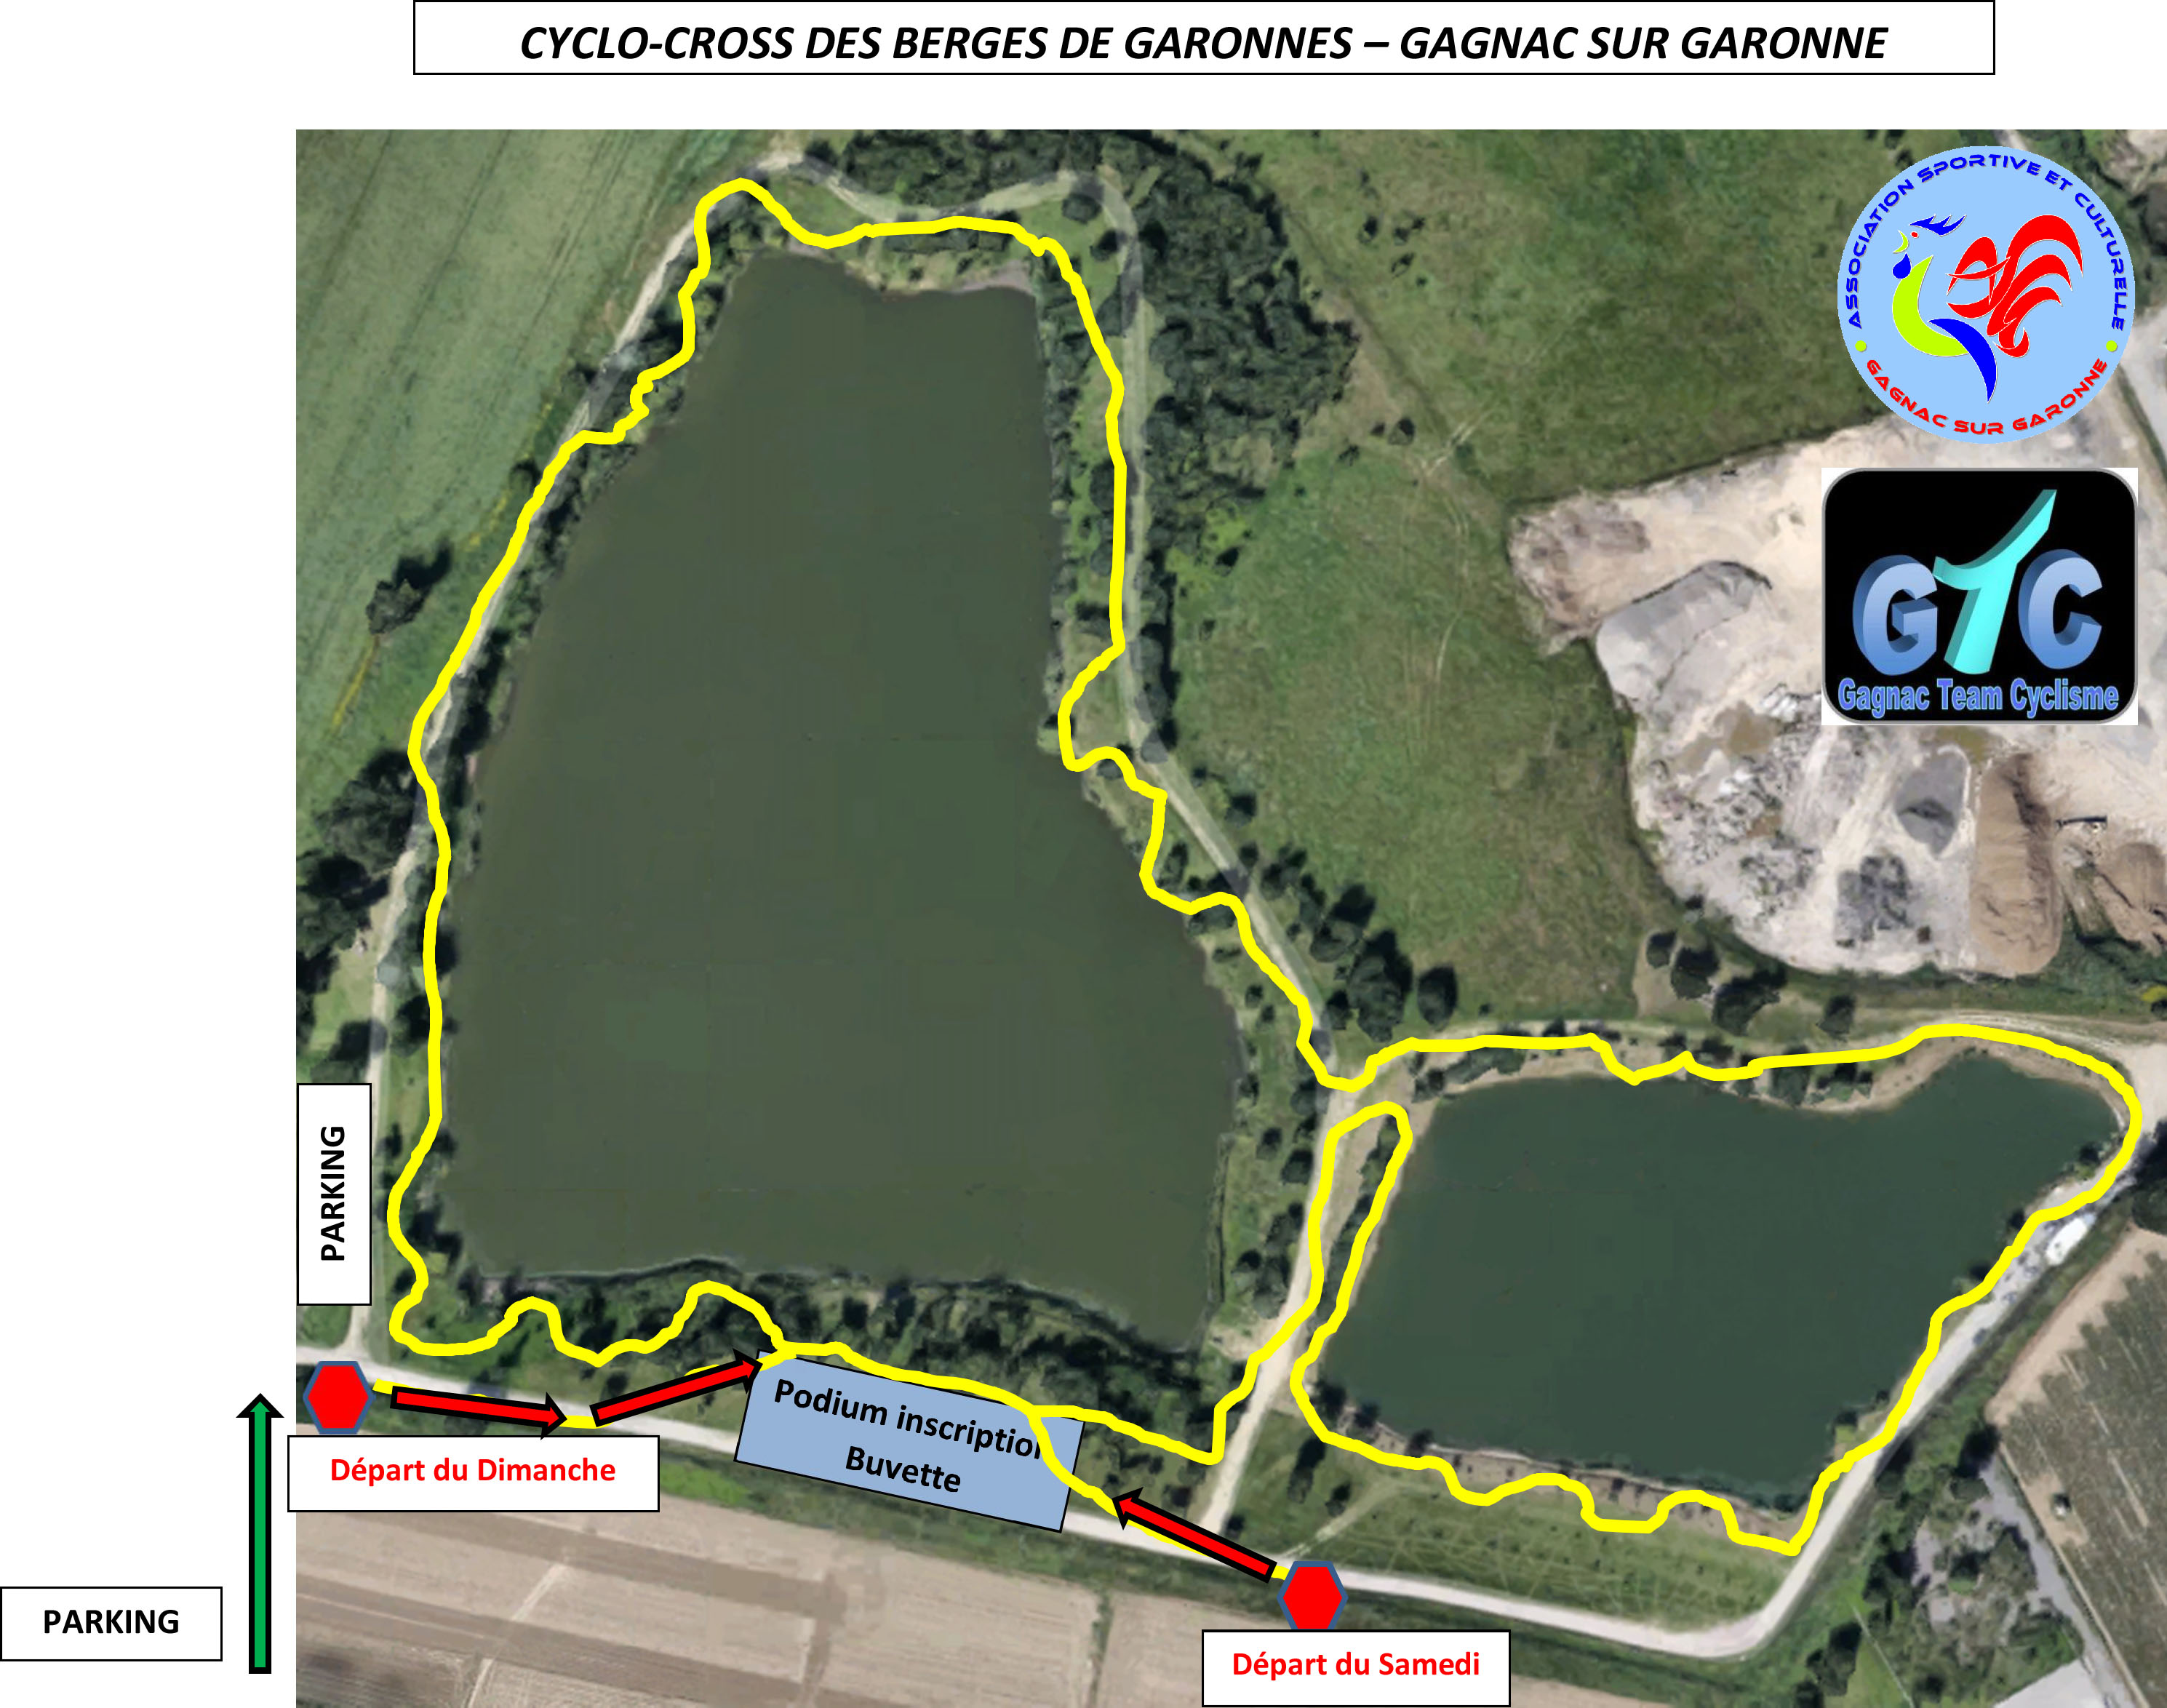 Plan parcours CX Gagnac